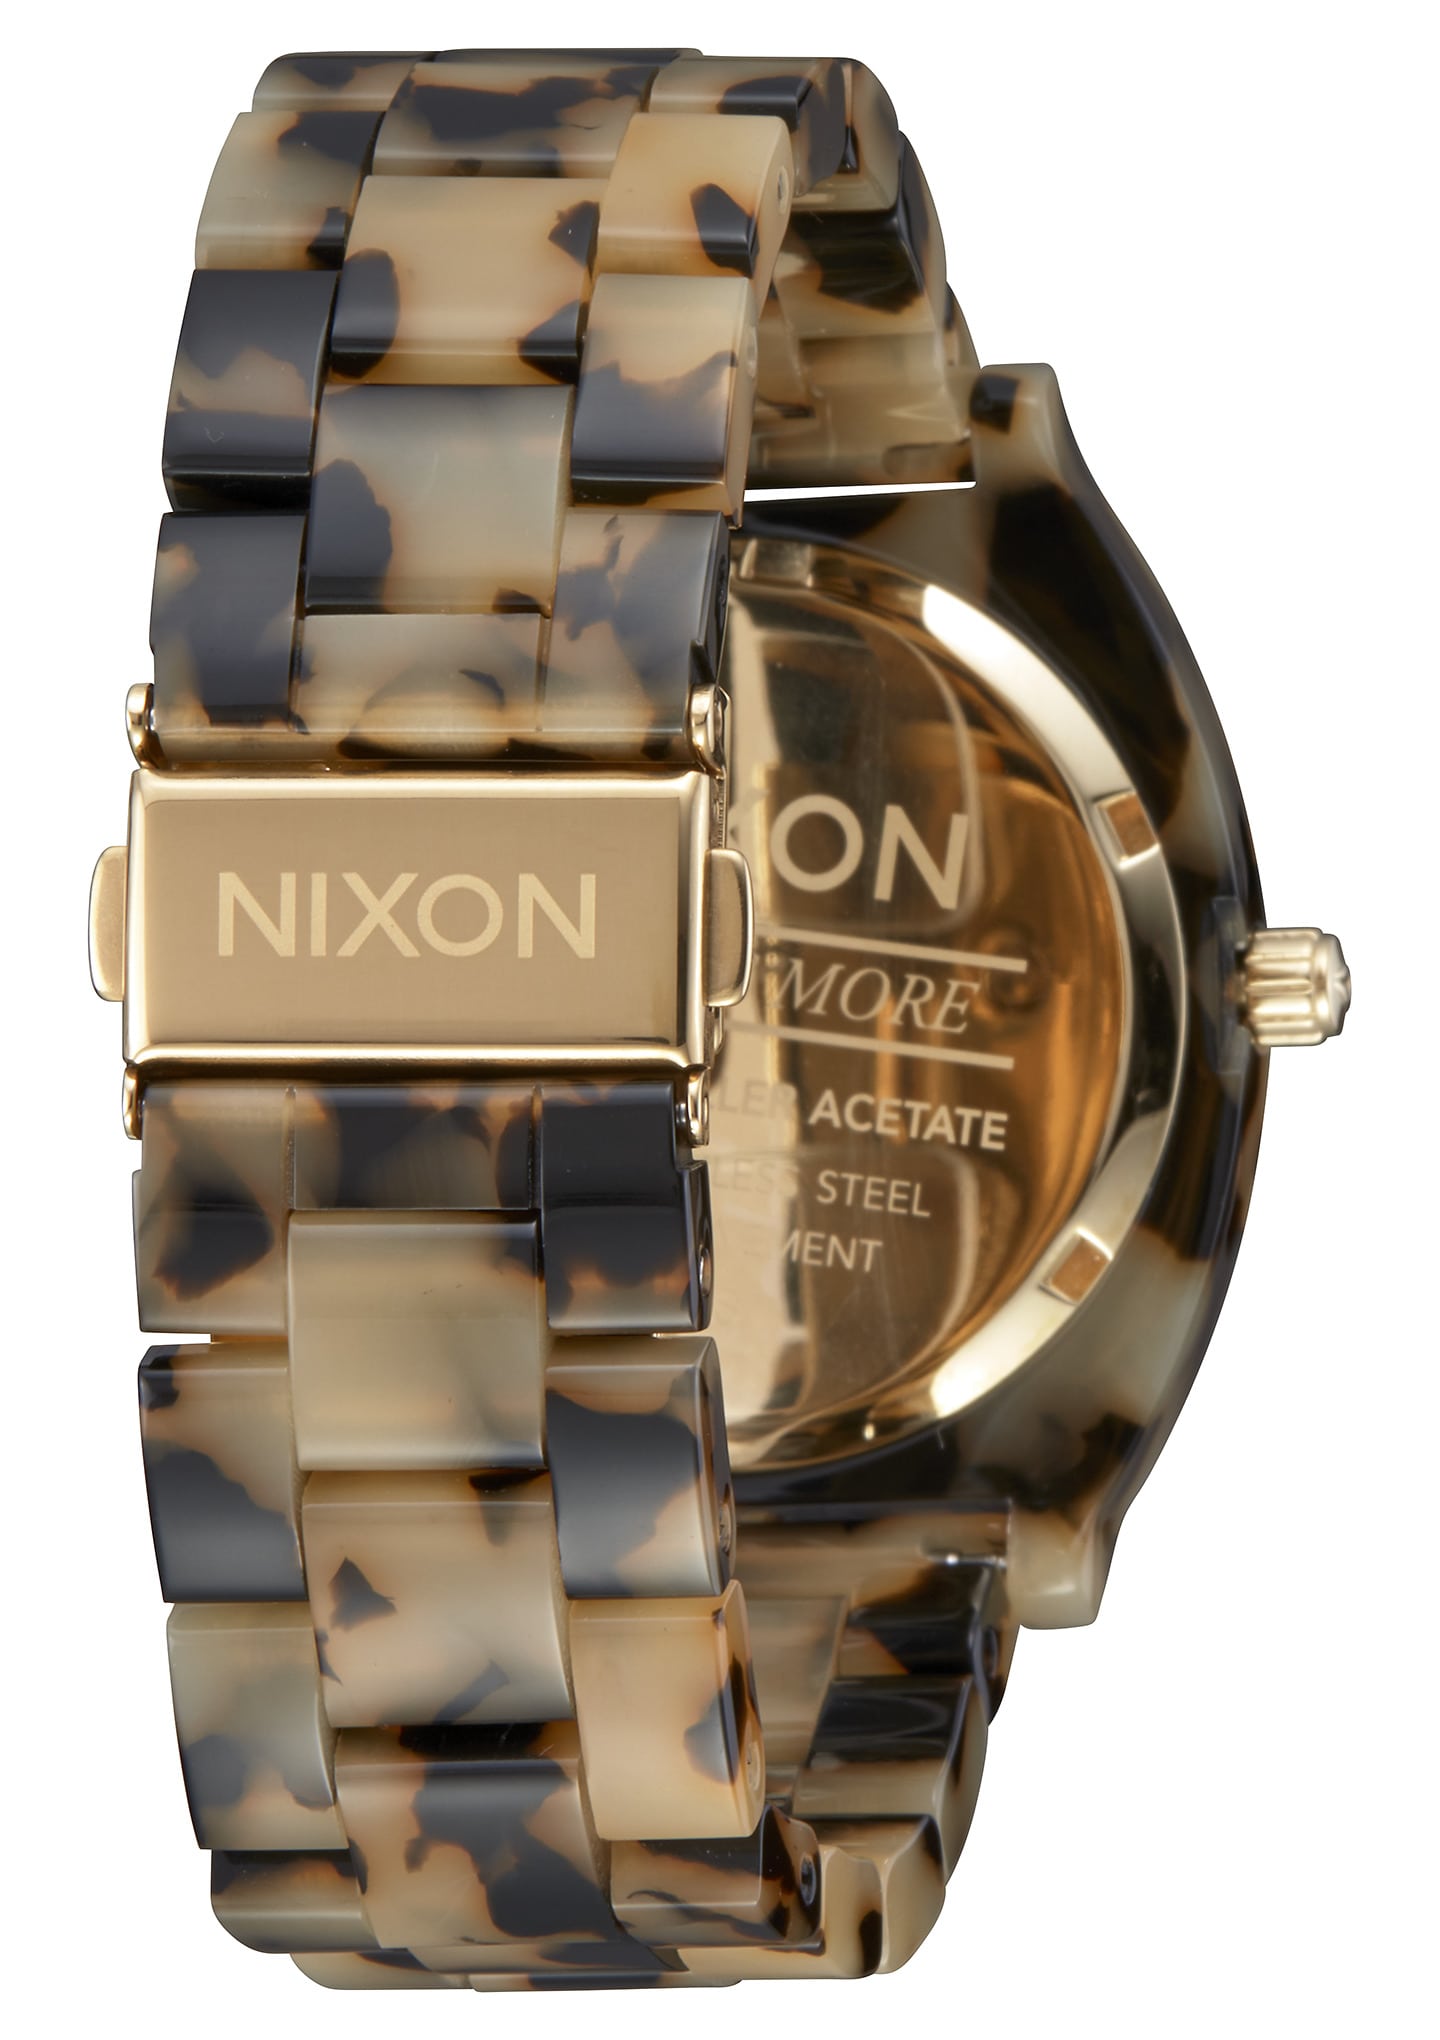 NIXON ニクソン 腕時計 TIME TELLER ACETTE タイムテラー